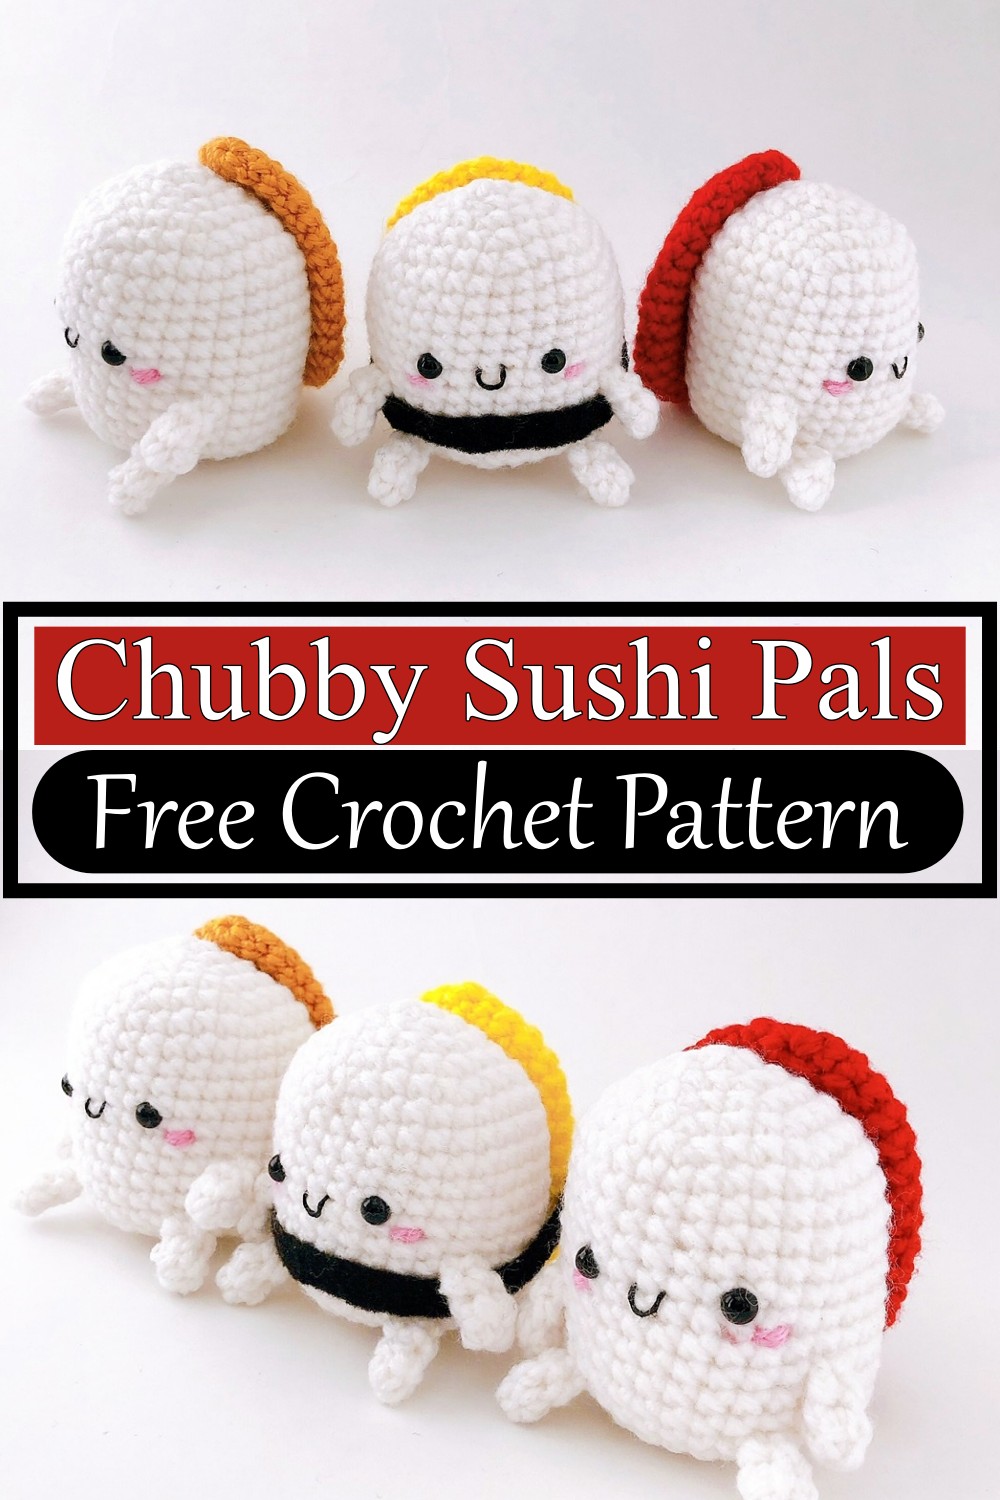 Chubby Sushi Pals